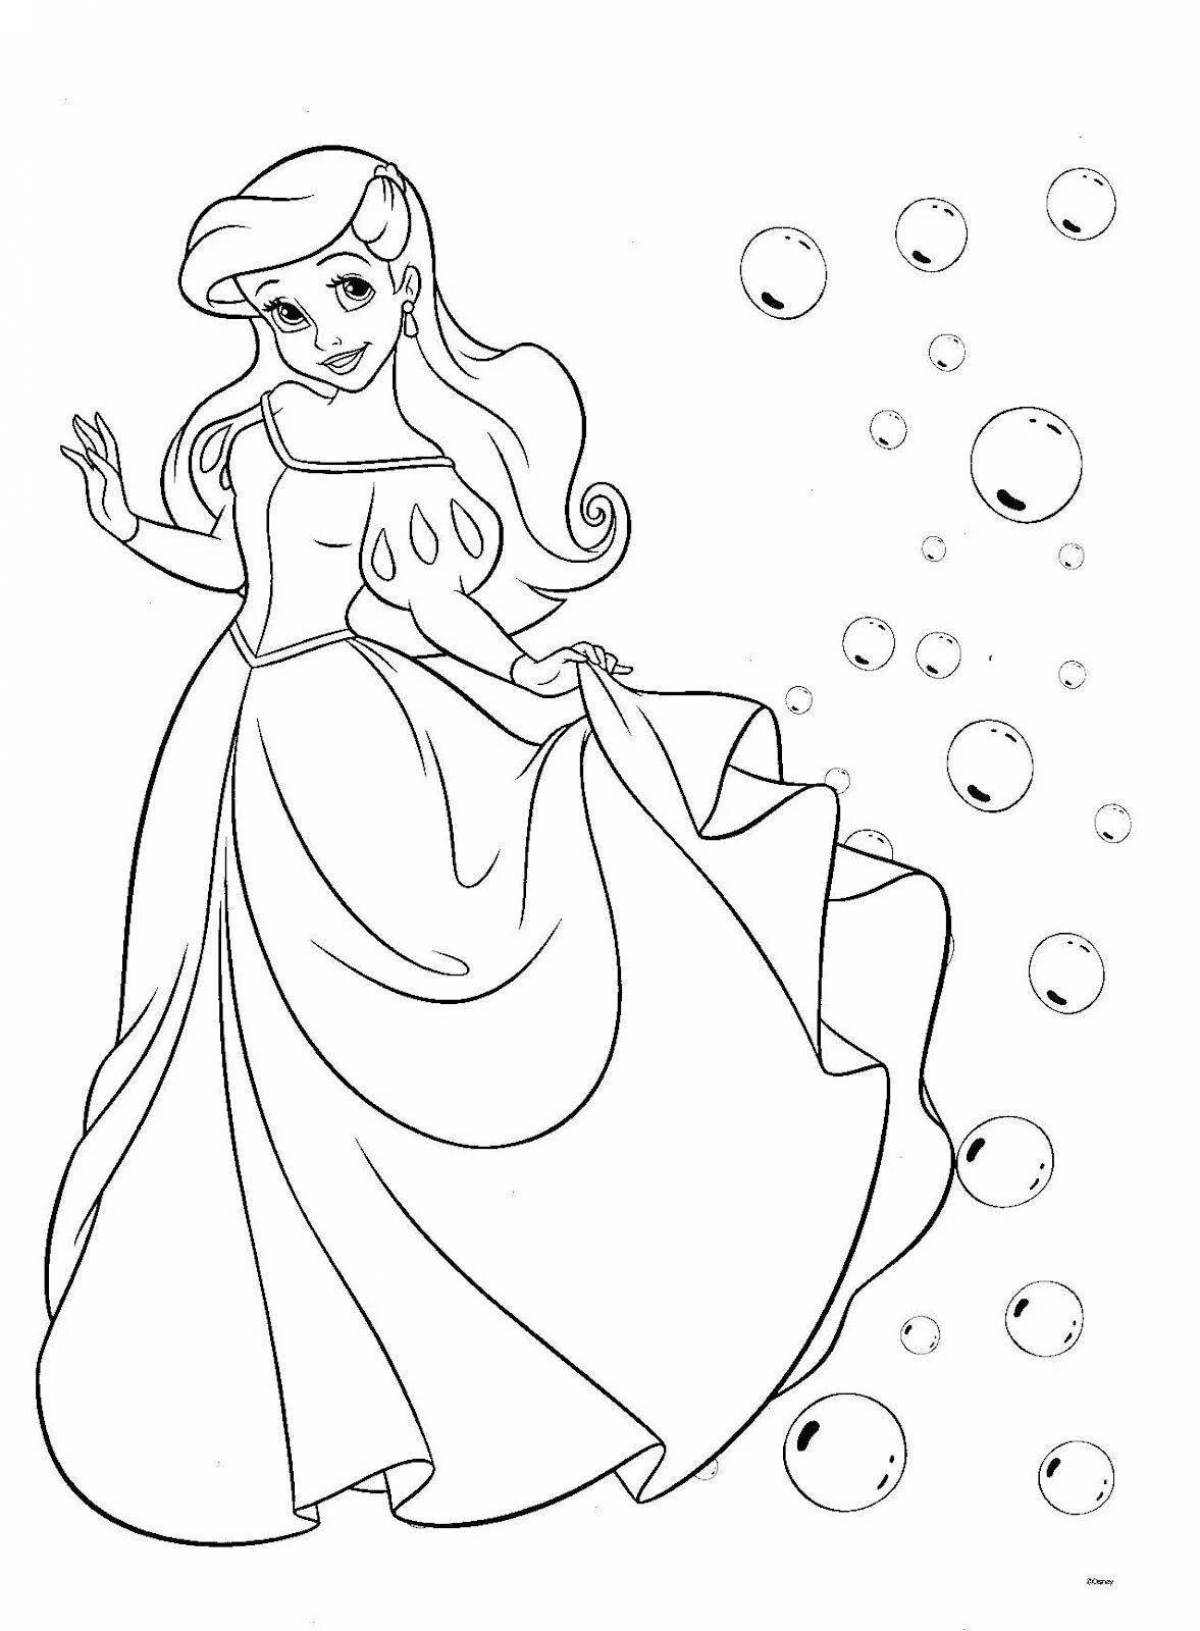 Fun princess coloring pages